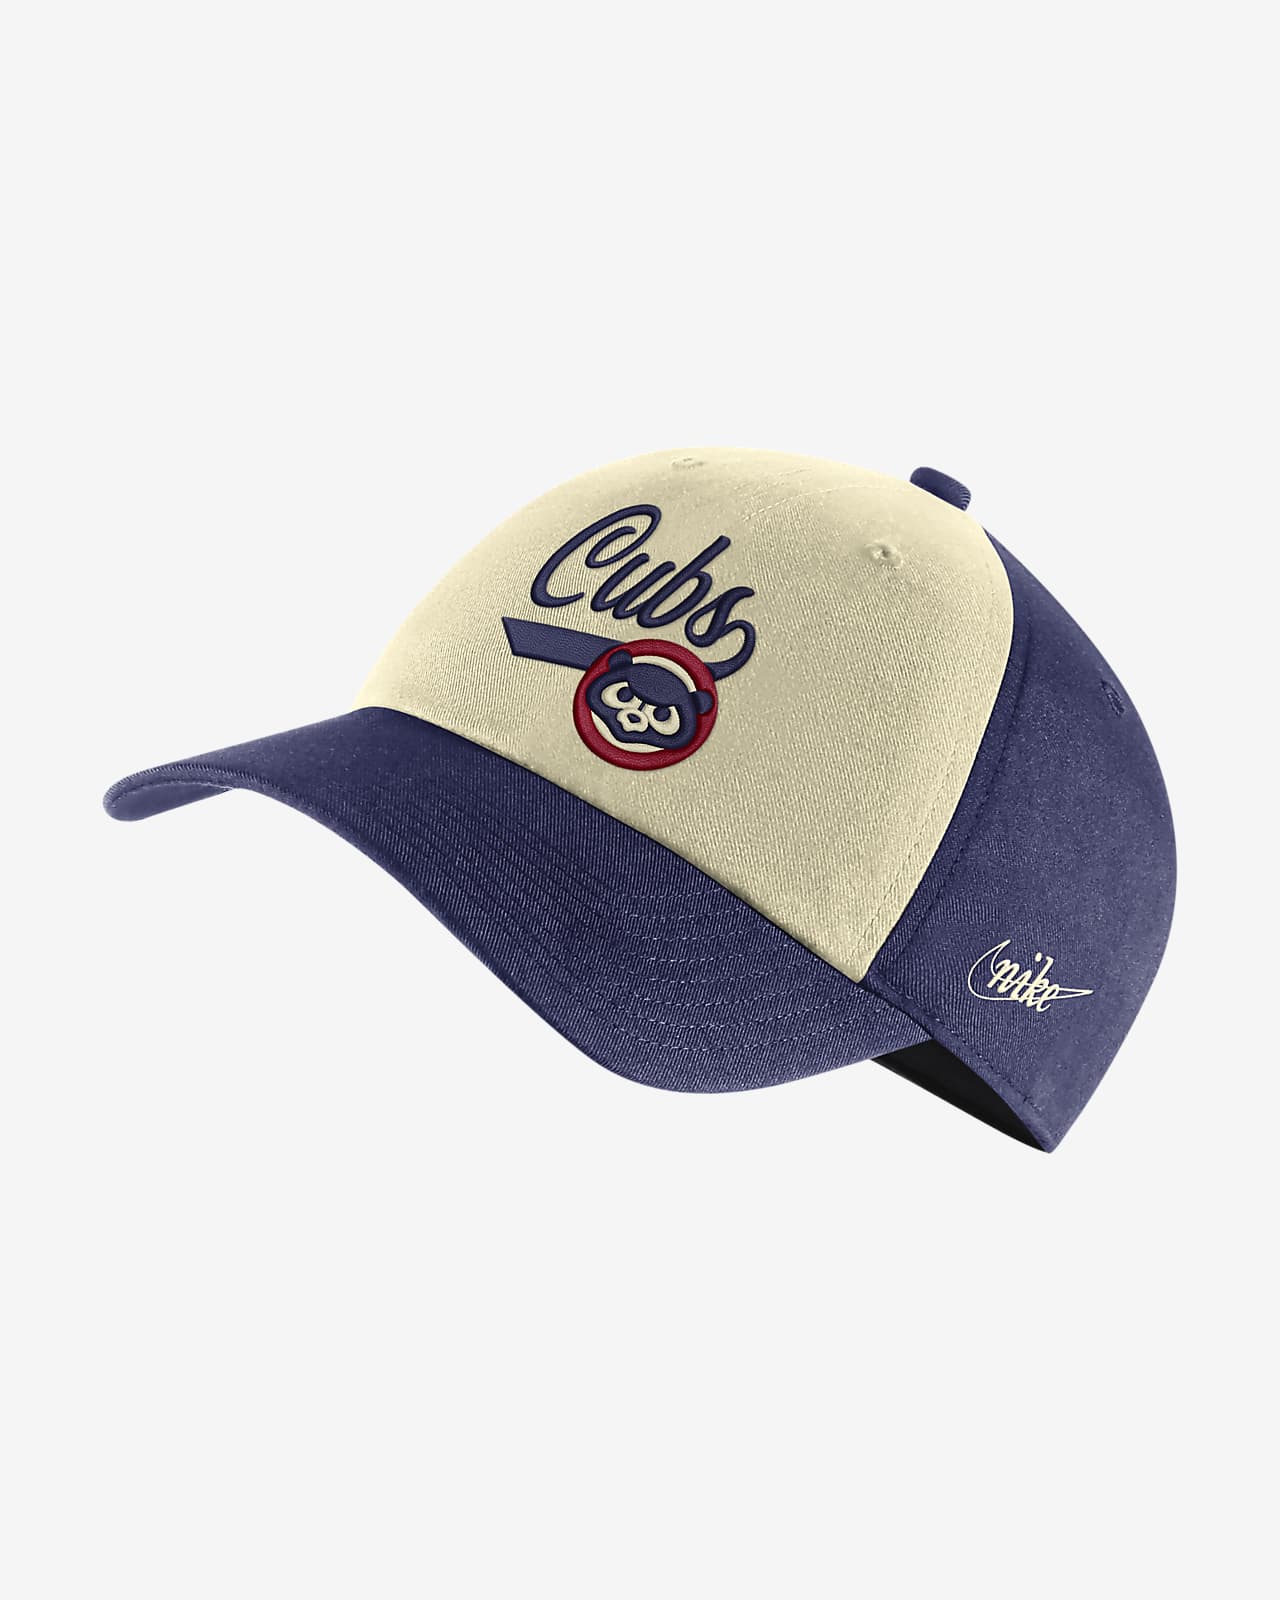 Nike Heritage86 (MLB Chicago Cubs) Hat